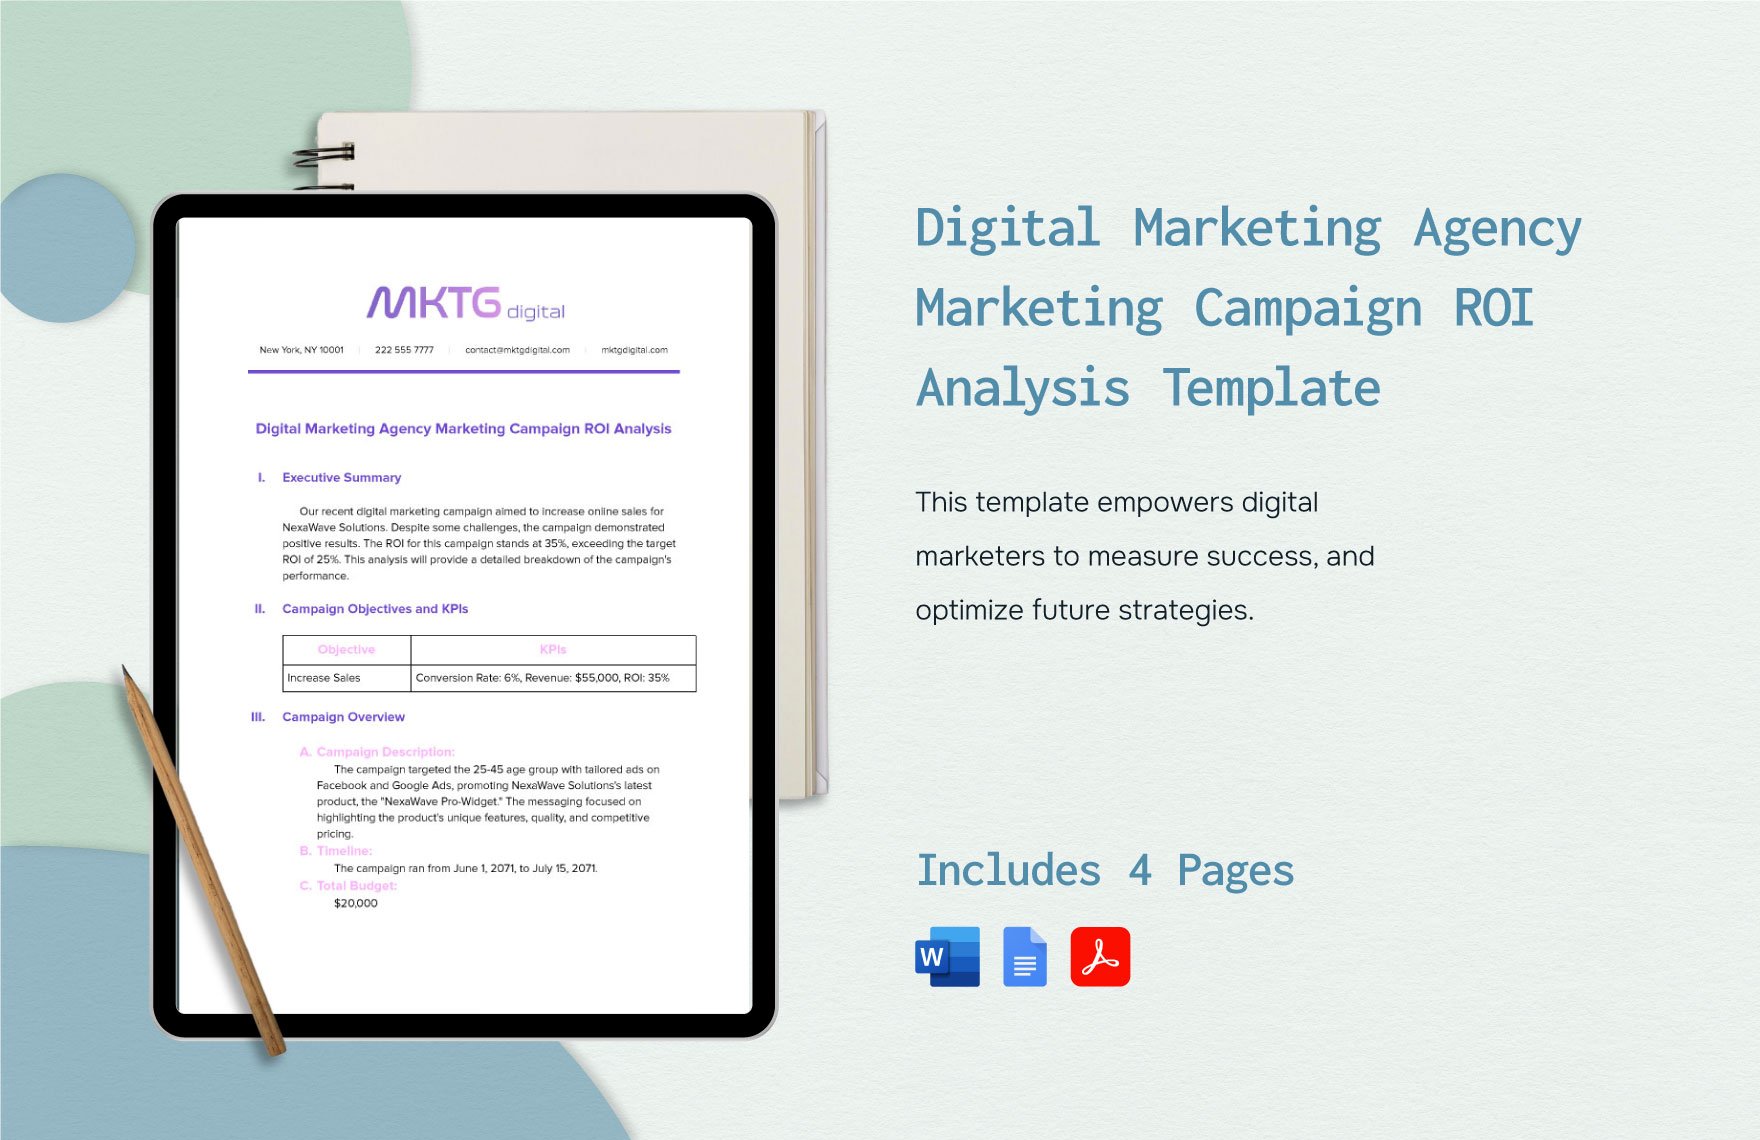 Digital Marketing Agency Marketing Campaign ROI Analysis Template